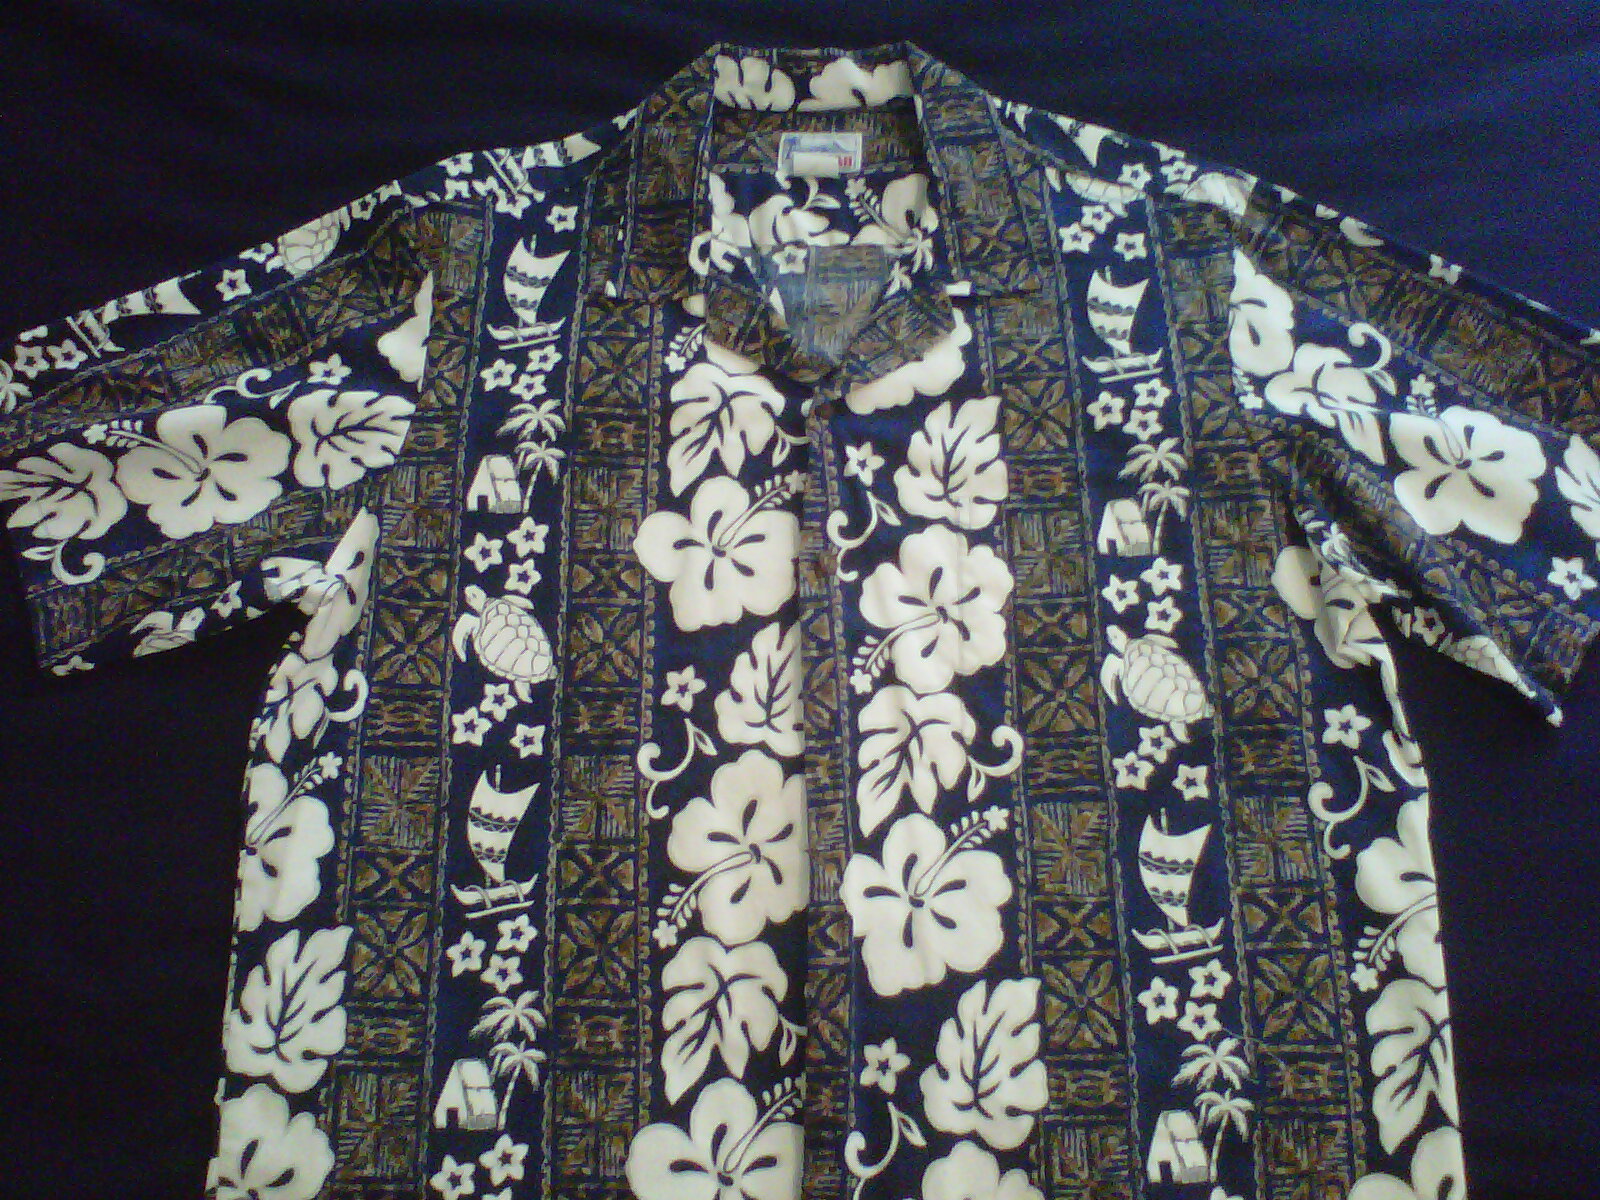 Blue Hawaiian print shirt